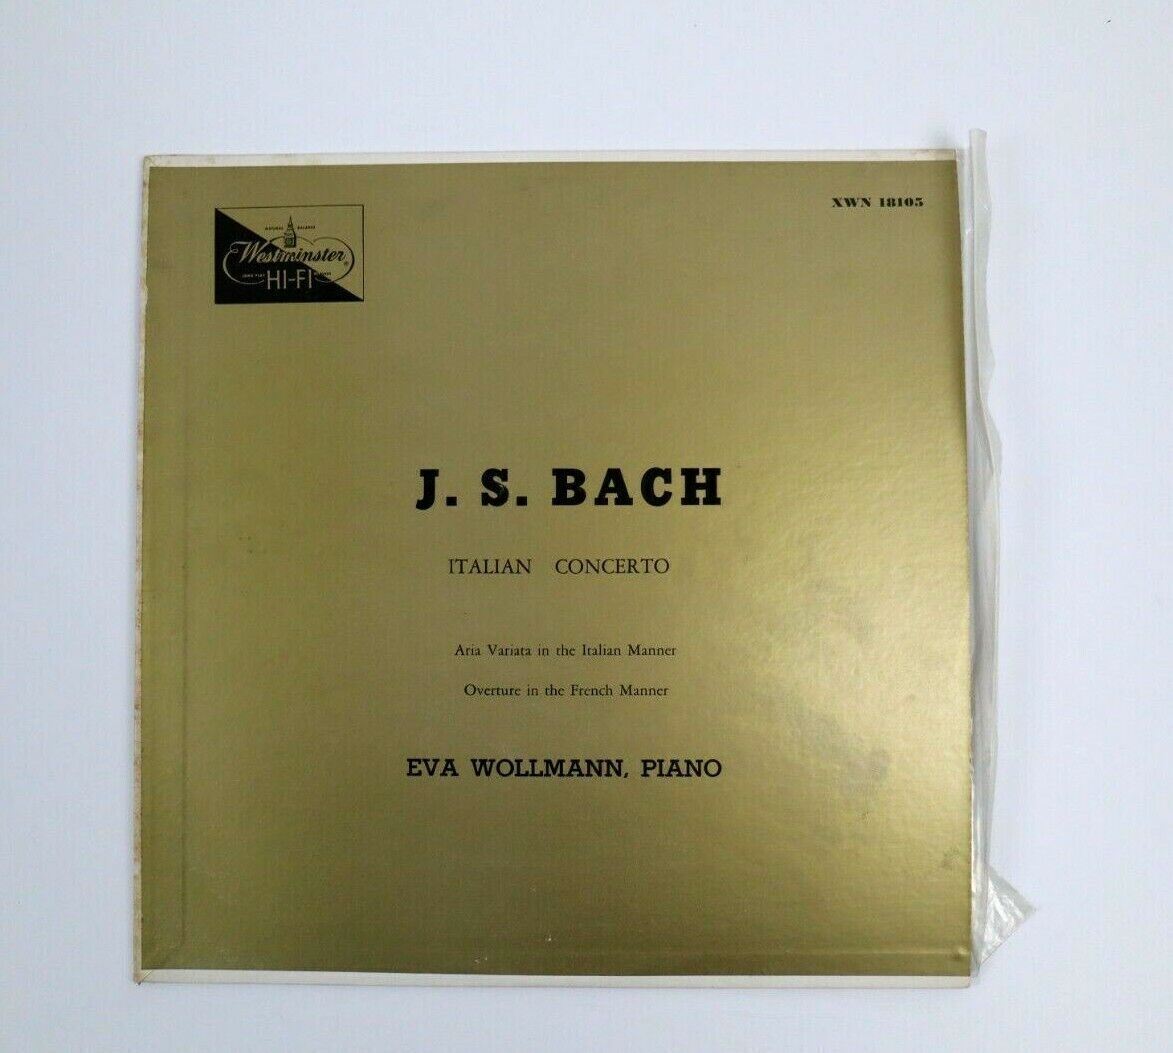 VTG J.S. Bach Italian Concerto Eva Wollmann XWN 18105 Classical Music Record